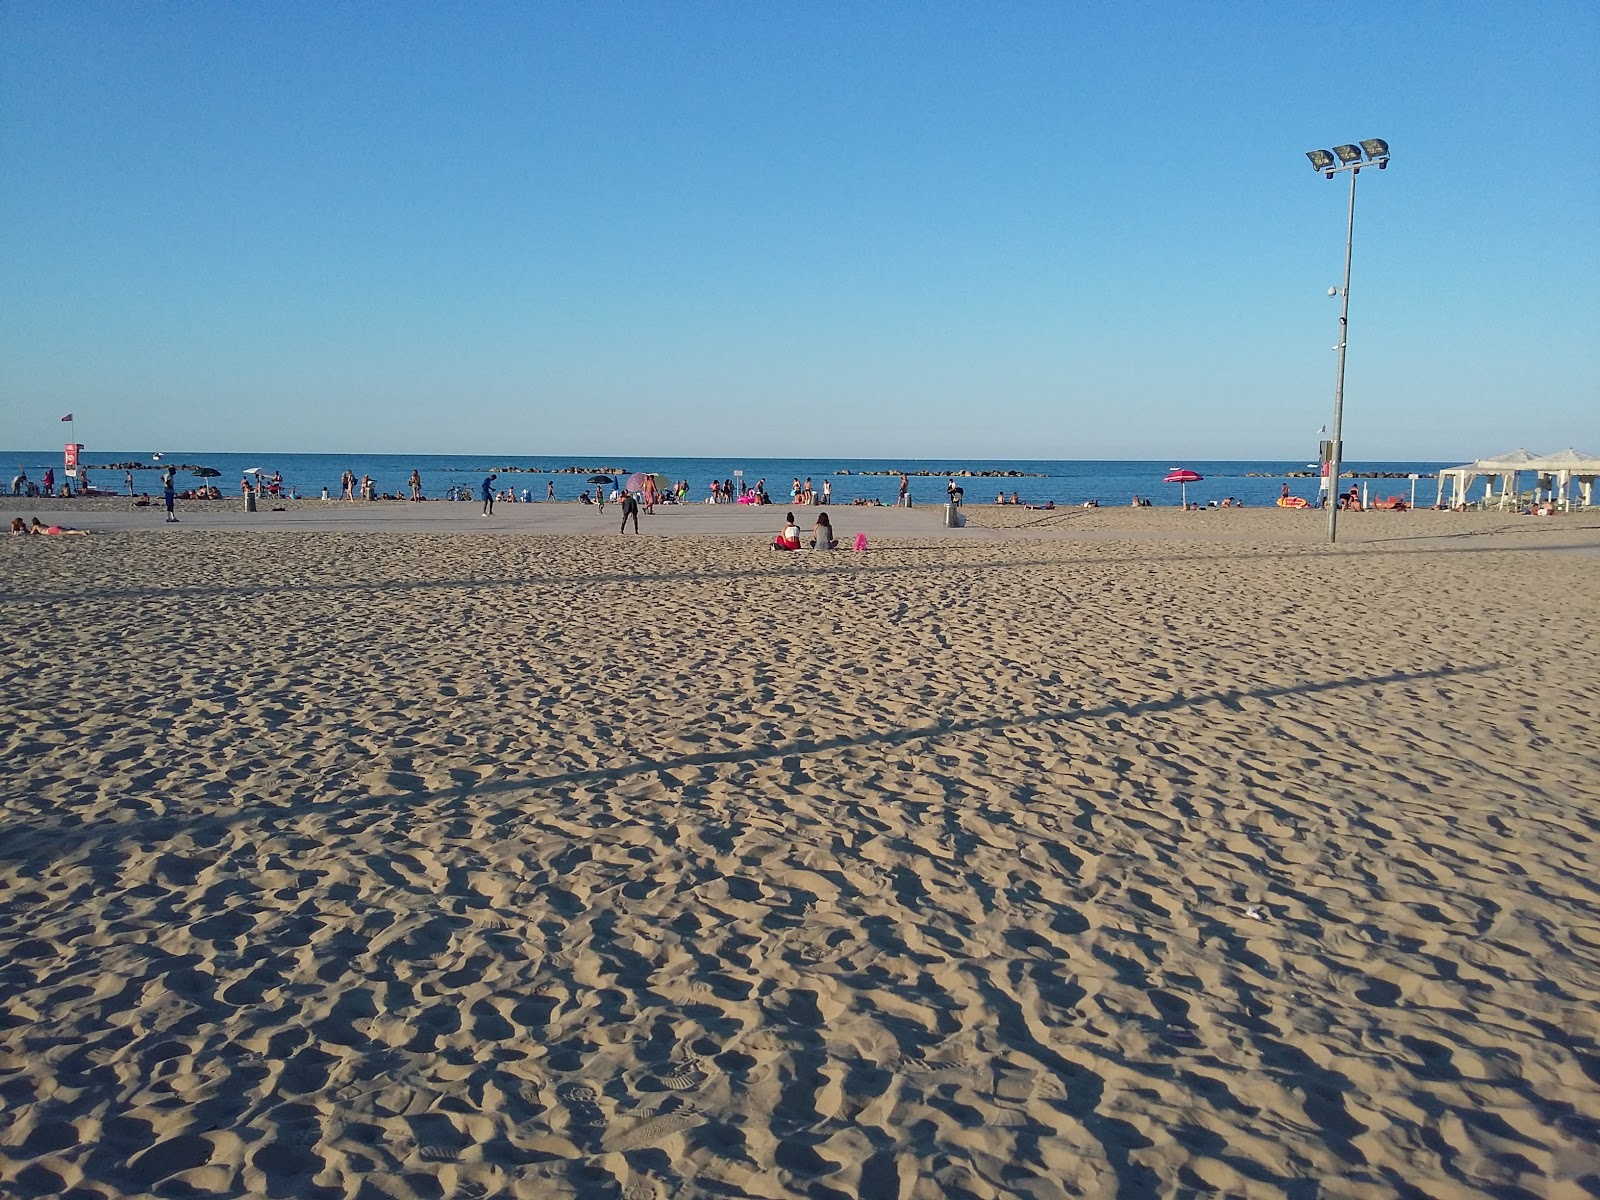 Foto de Spiaggia di Pescara - lugar popular entre os apreciadores de relaxamento